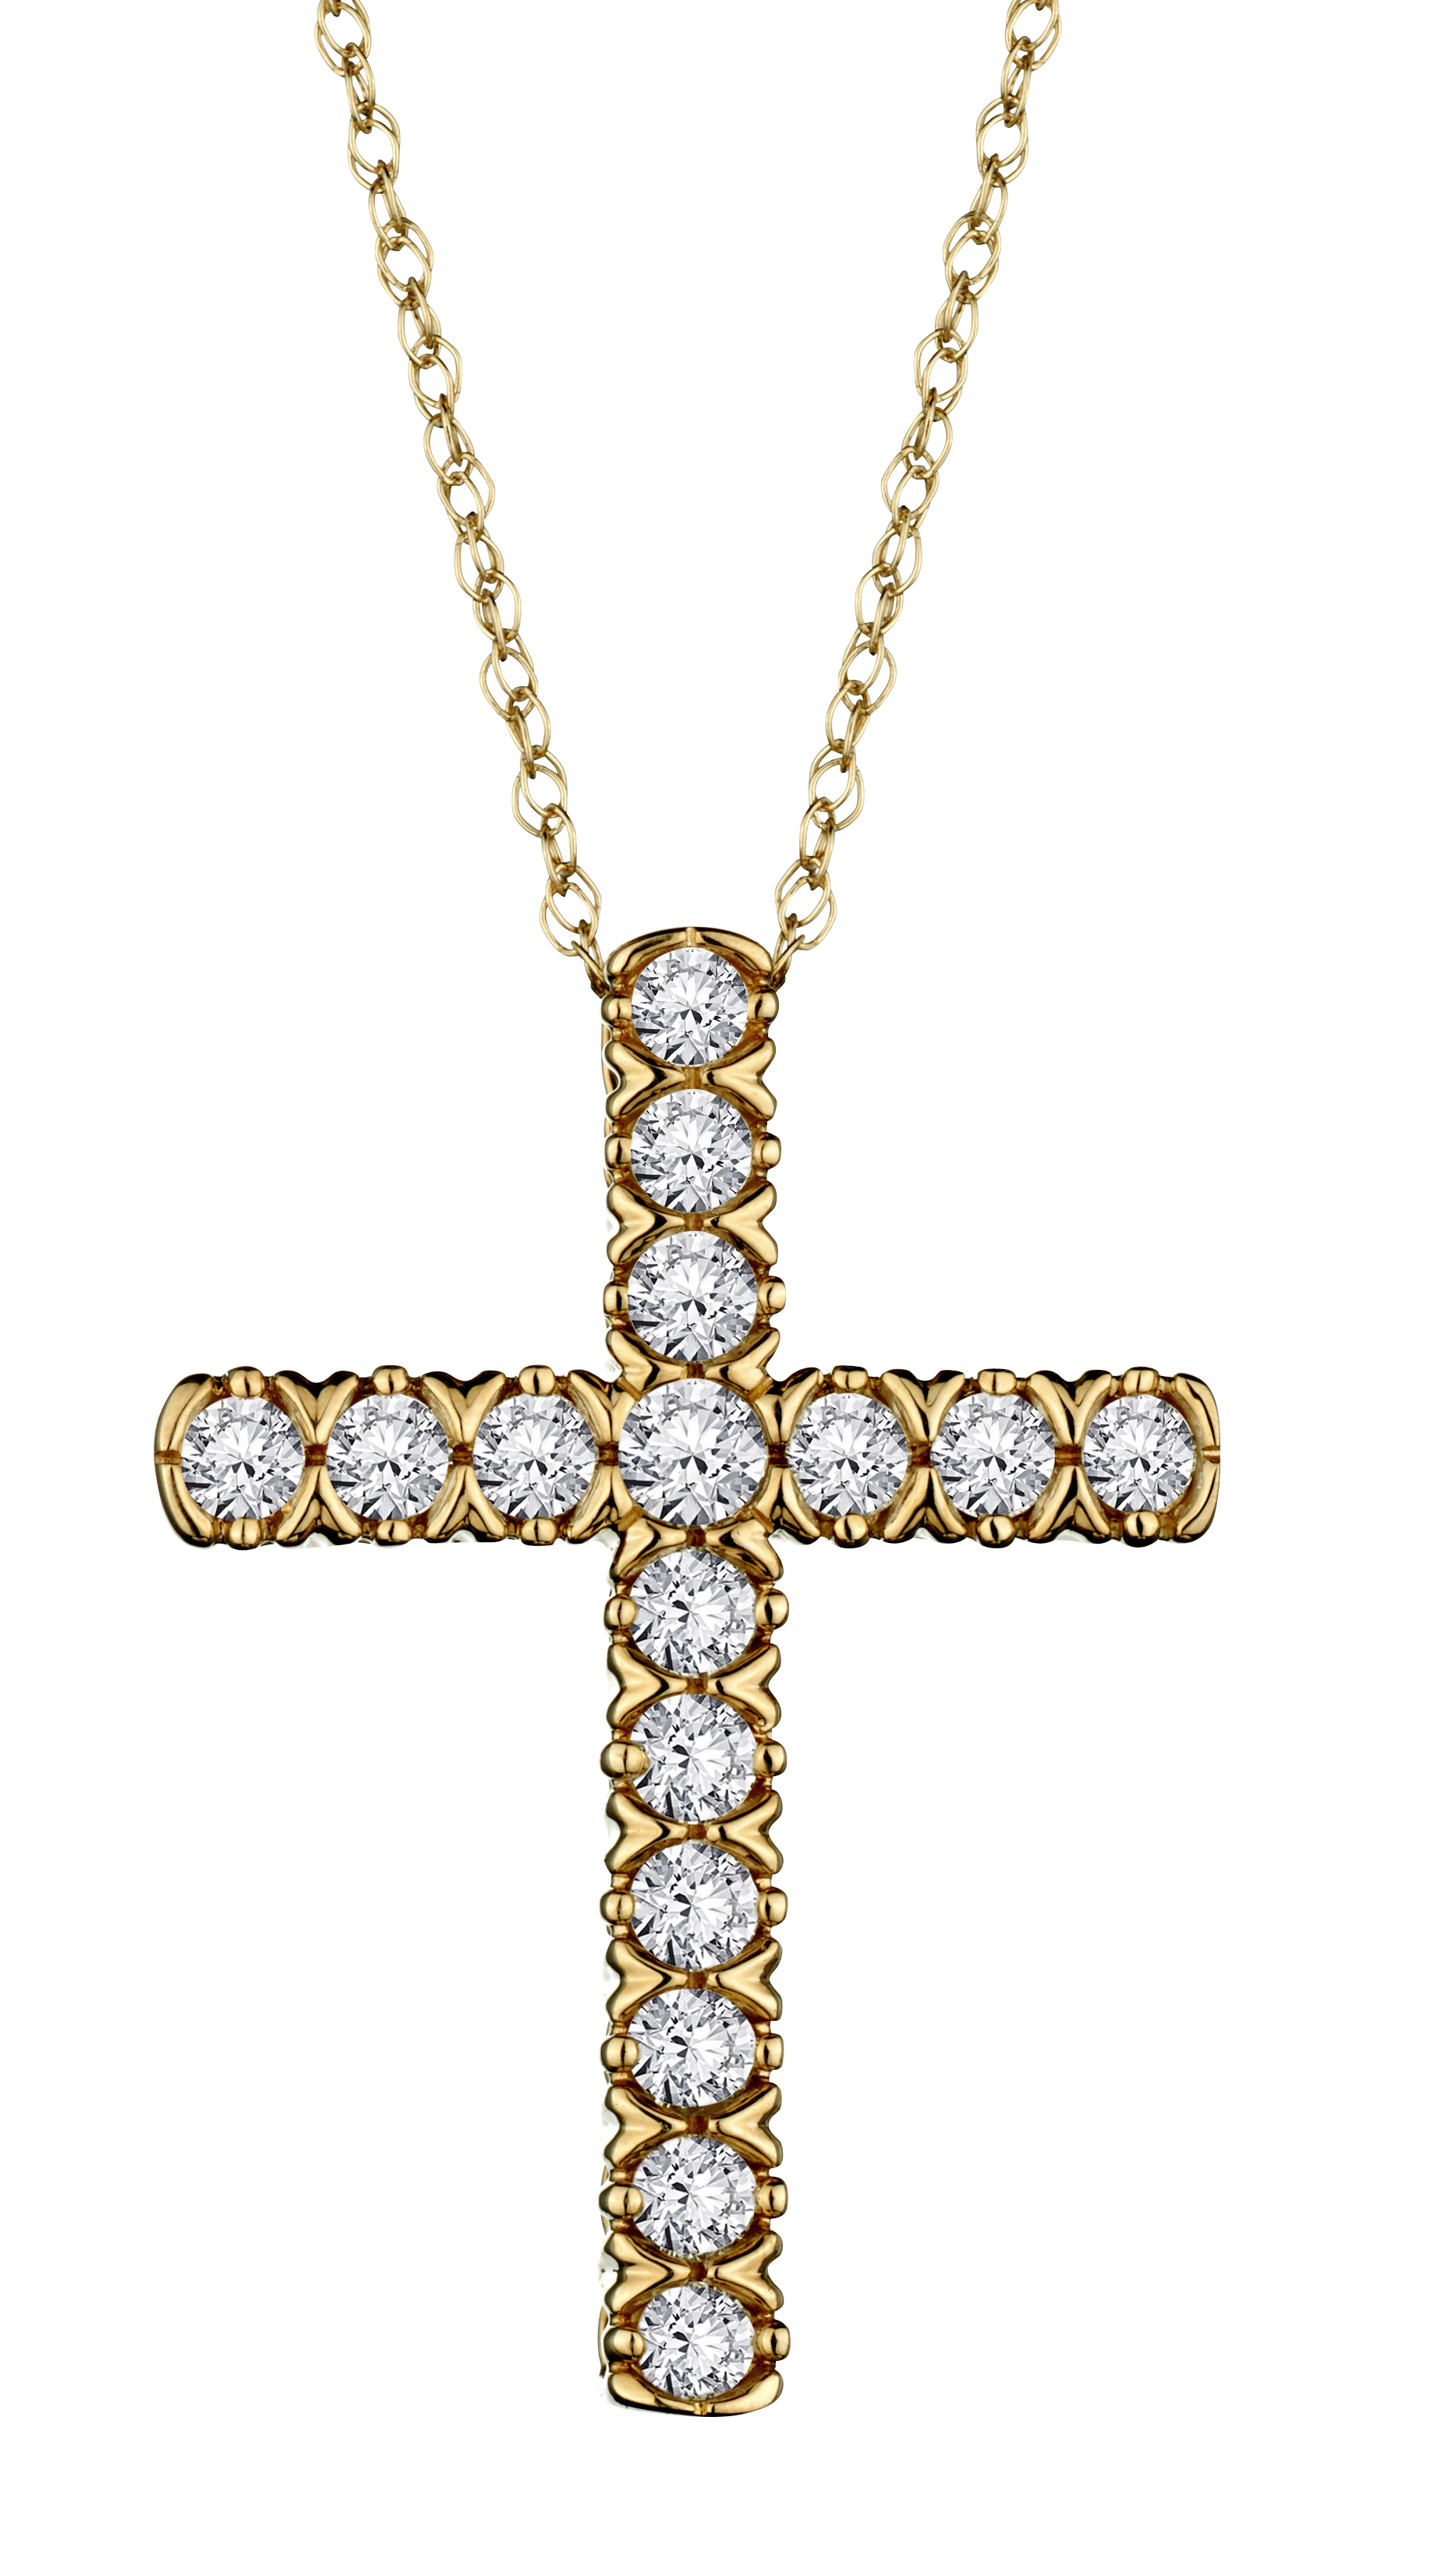 10kt Yellow Gold, .50 Carat of Diamonds, Cross Pendant.....................NOW